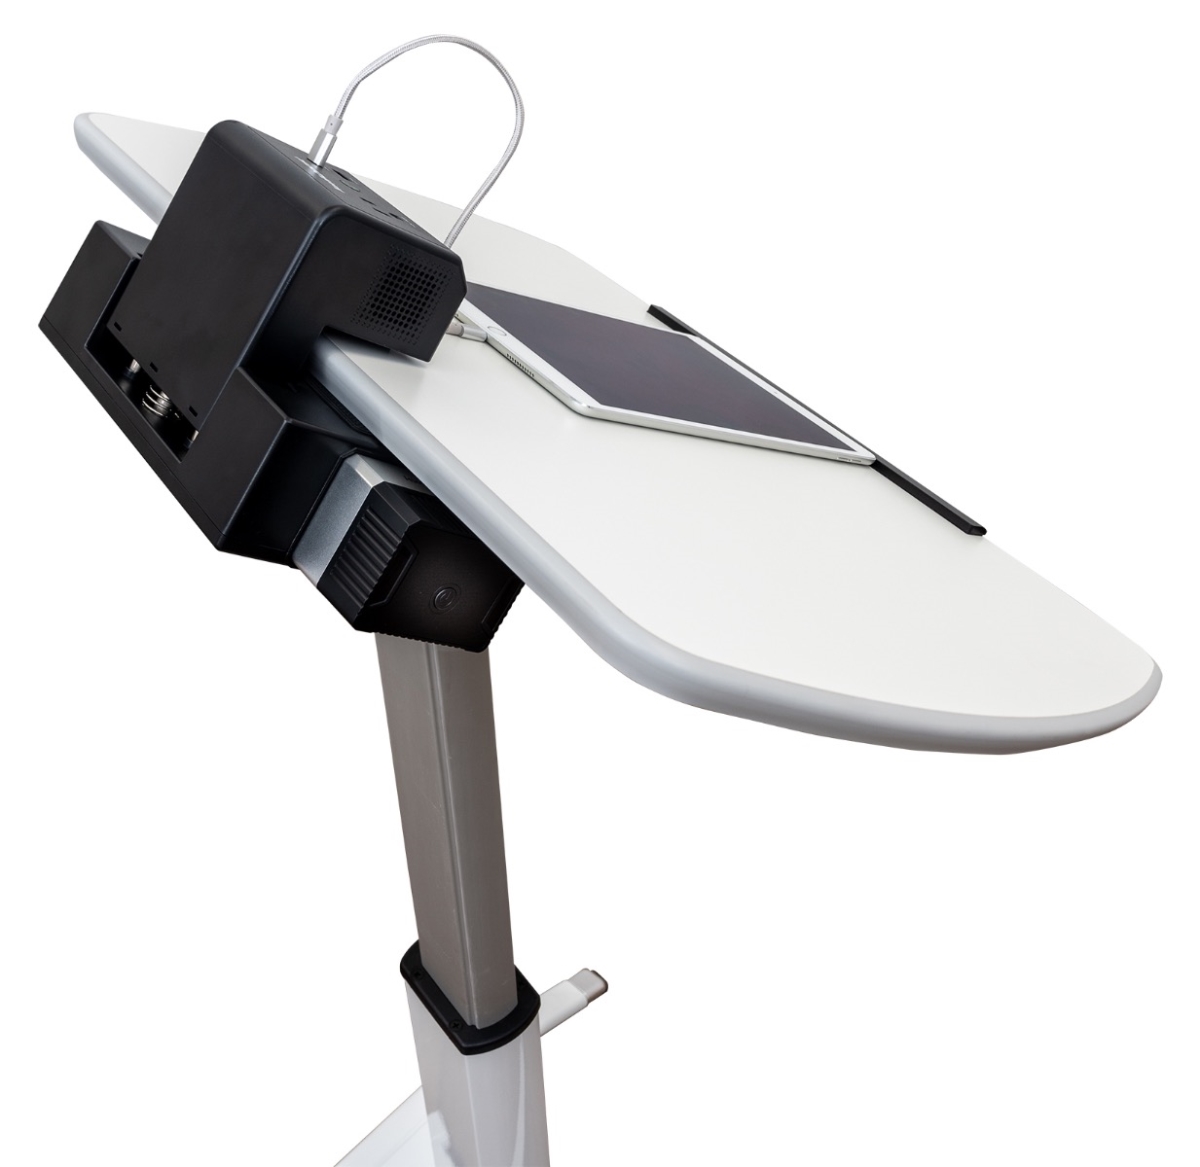 LX-PNADJ-EPW Pneumatic Height-Adjustable Lectern & Mobile Standing Desk with KwikBoost EdgePower, Black -  Luxor